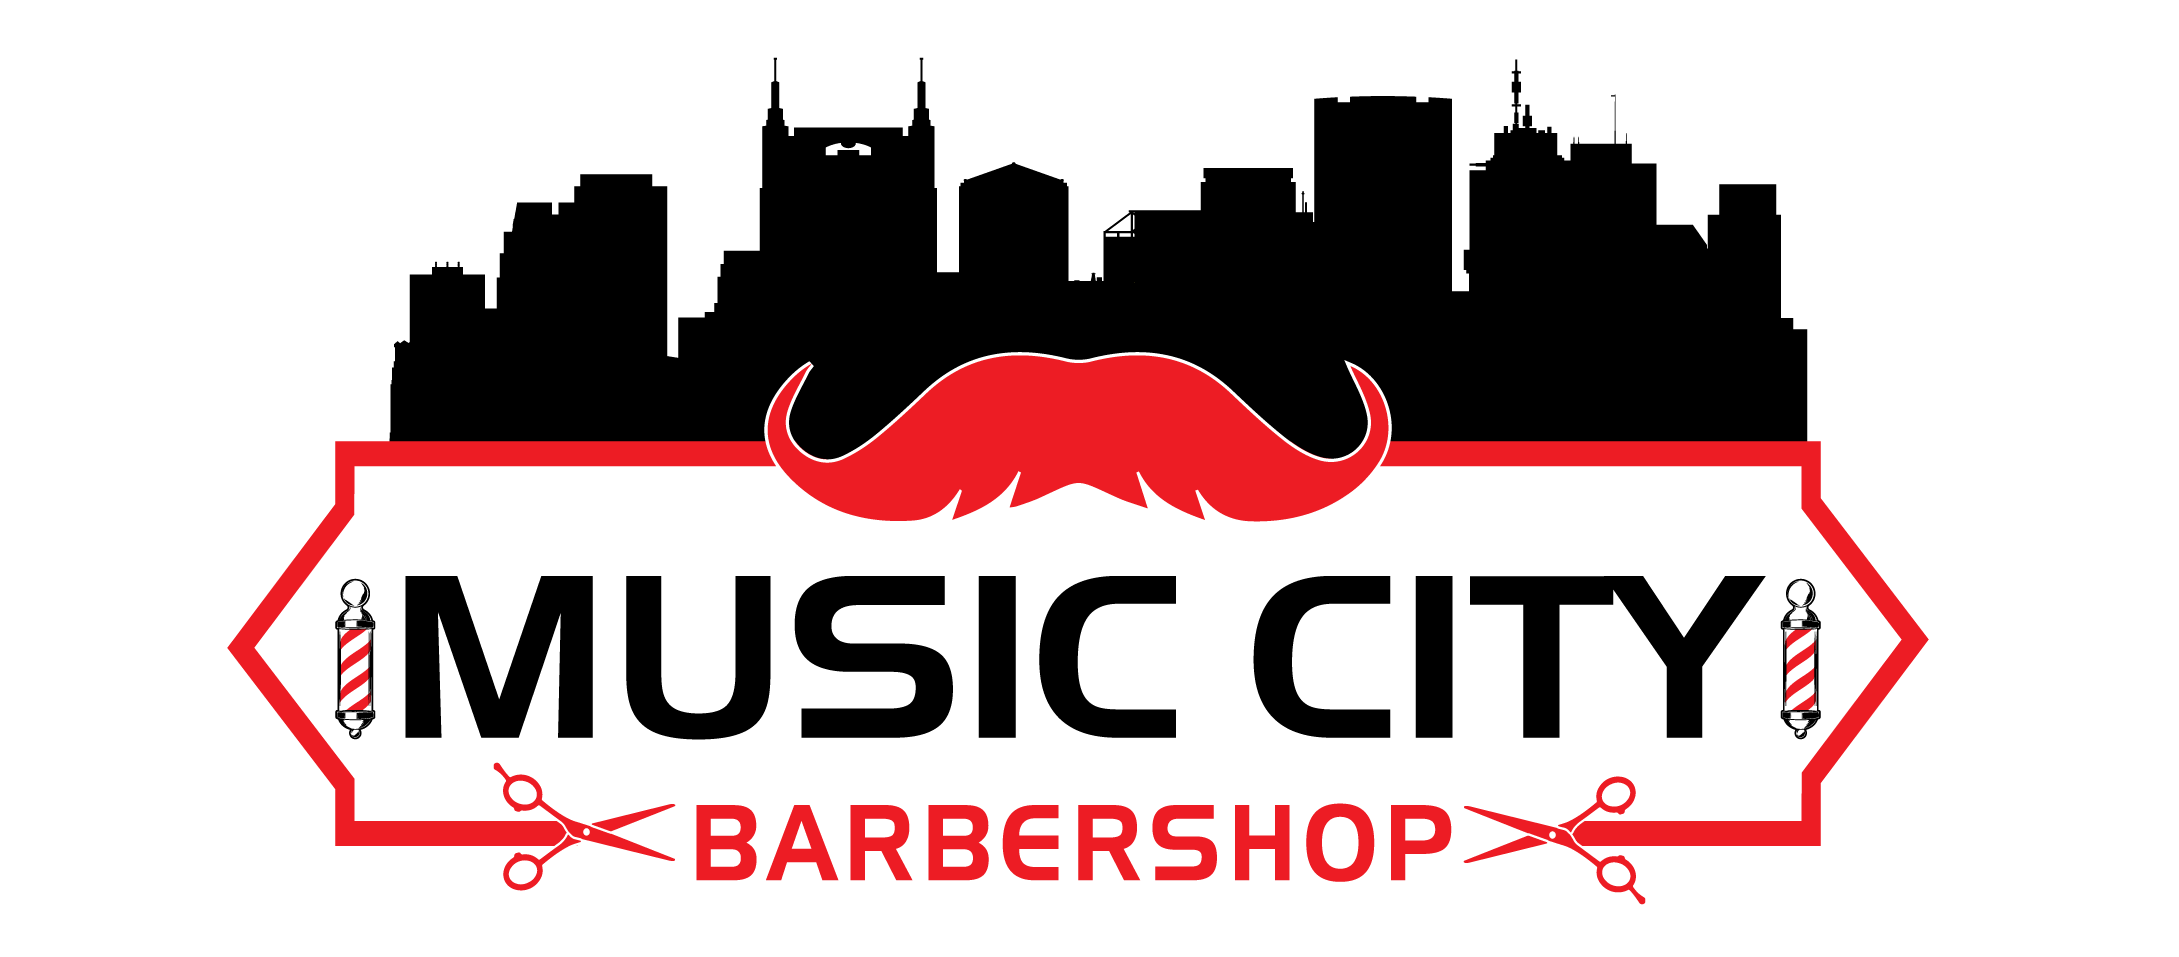 Music City Barbershop barbers in Nashville TN